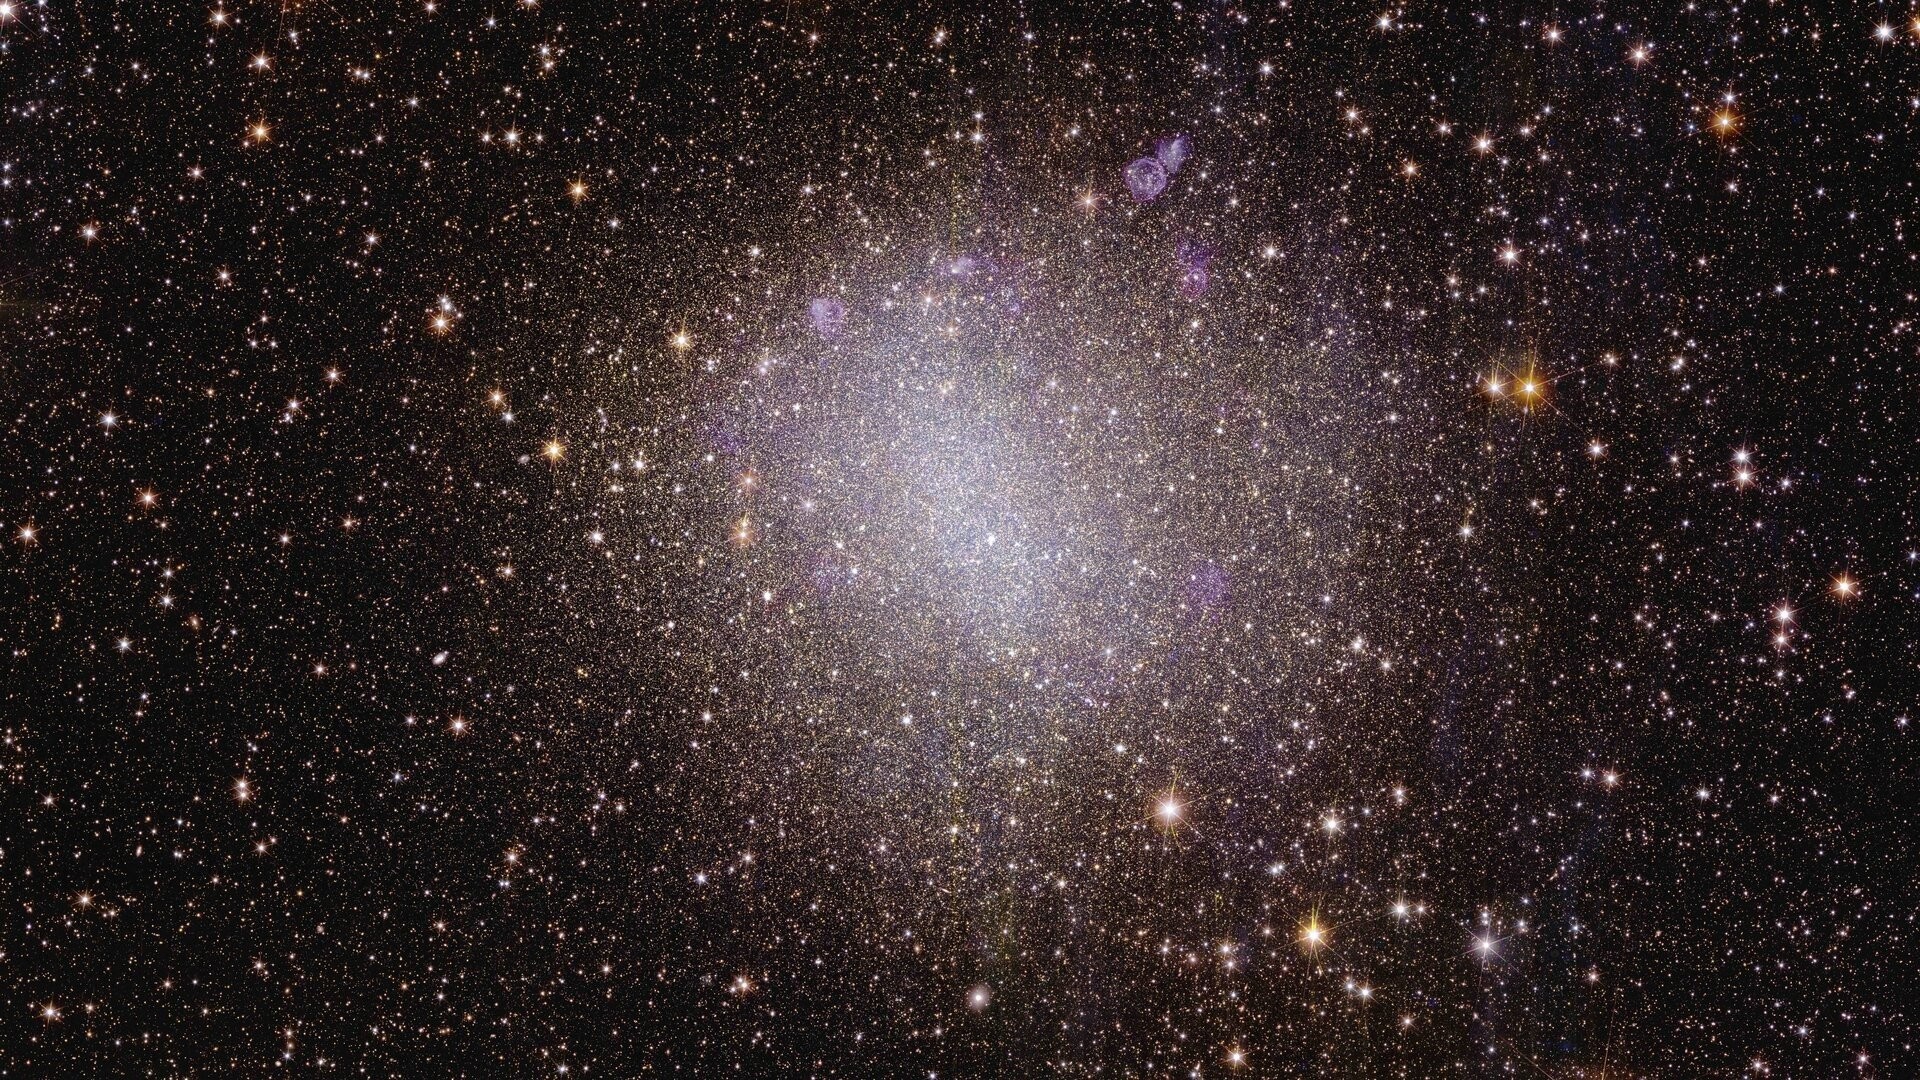 euclid-s-view-of-irregular-galaxy-ngc-6822-pillars.jpg